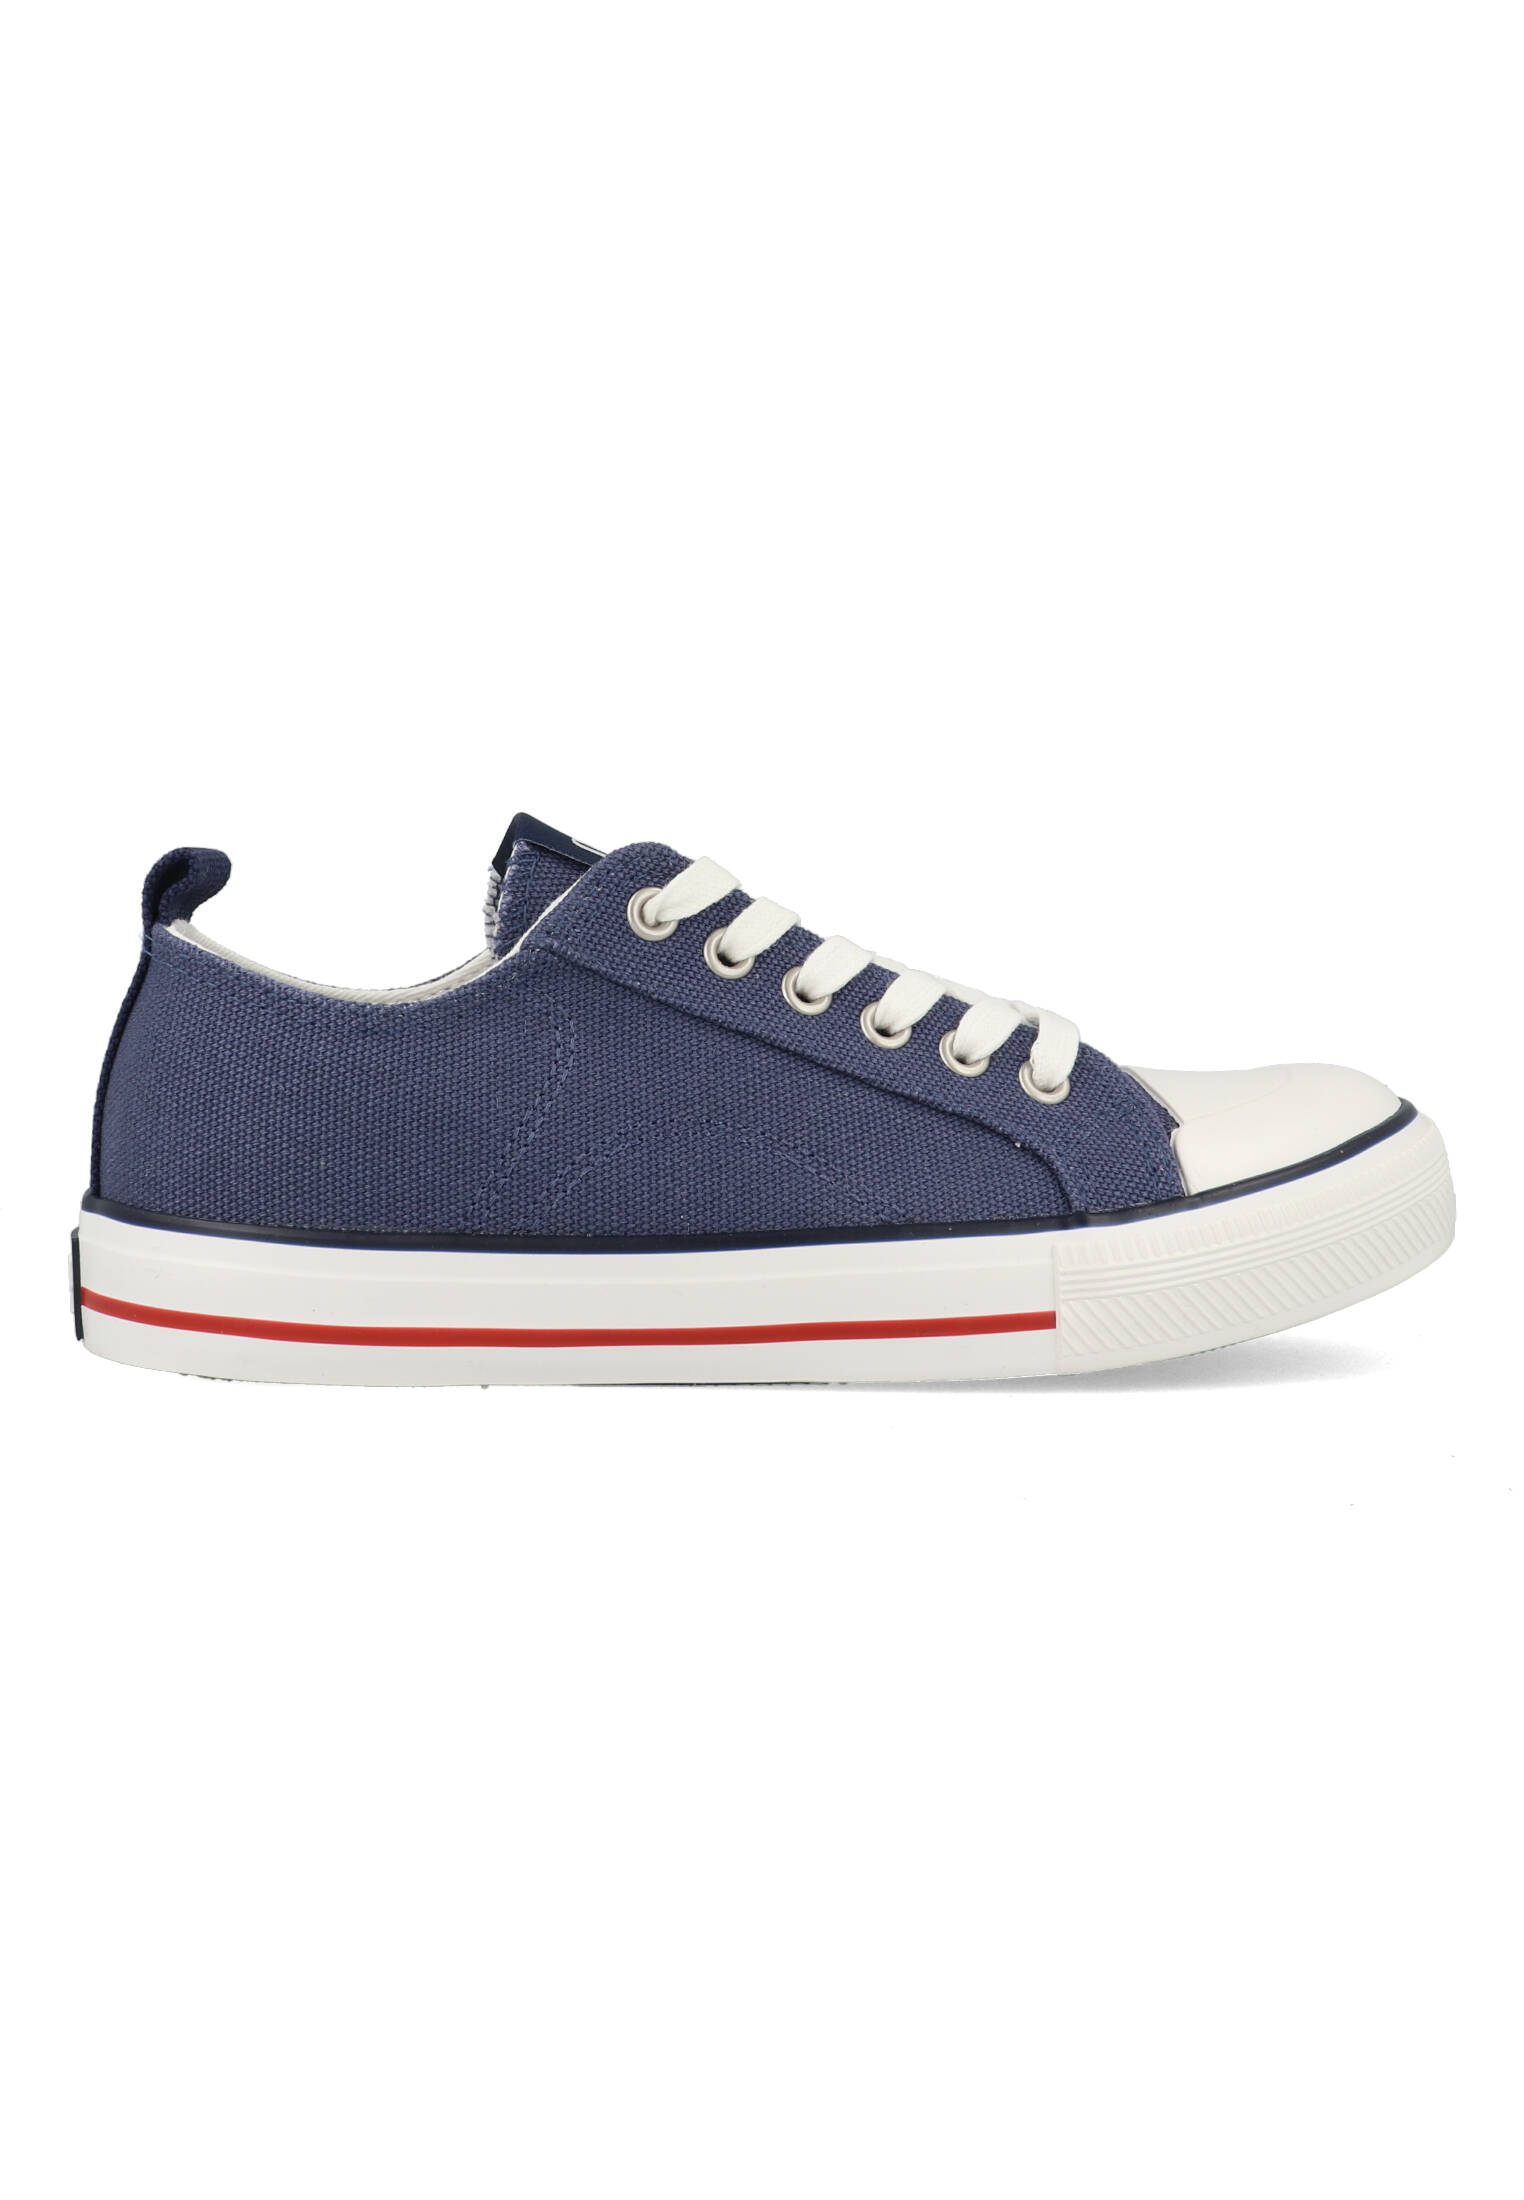 Gap - Sneaker - Female - Blue - 42 - Sneakers